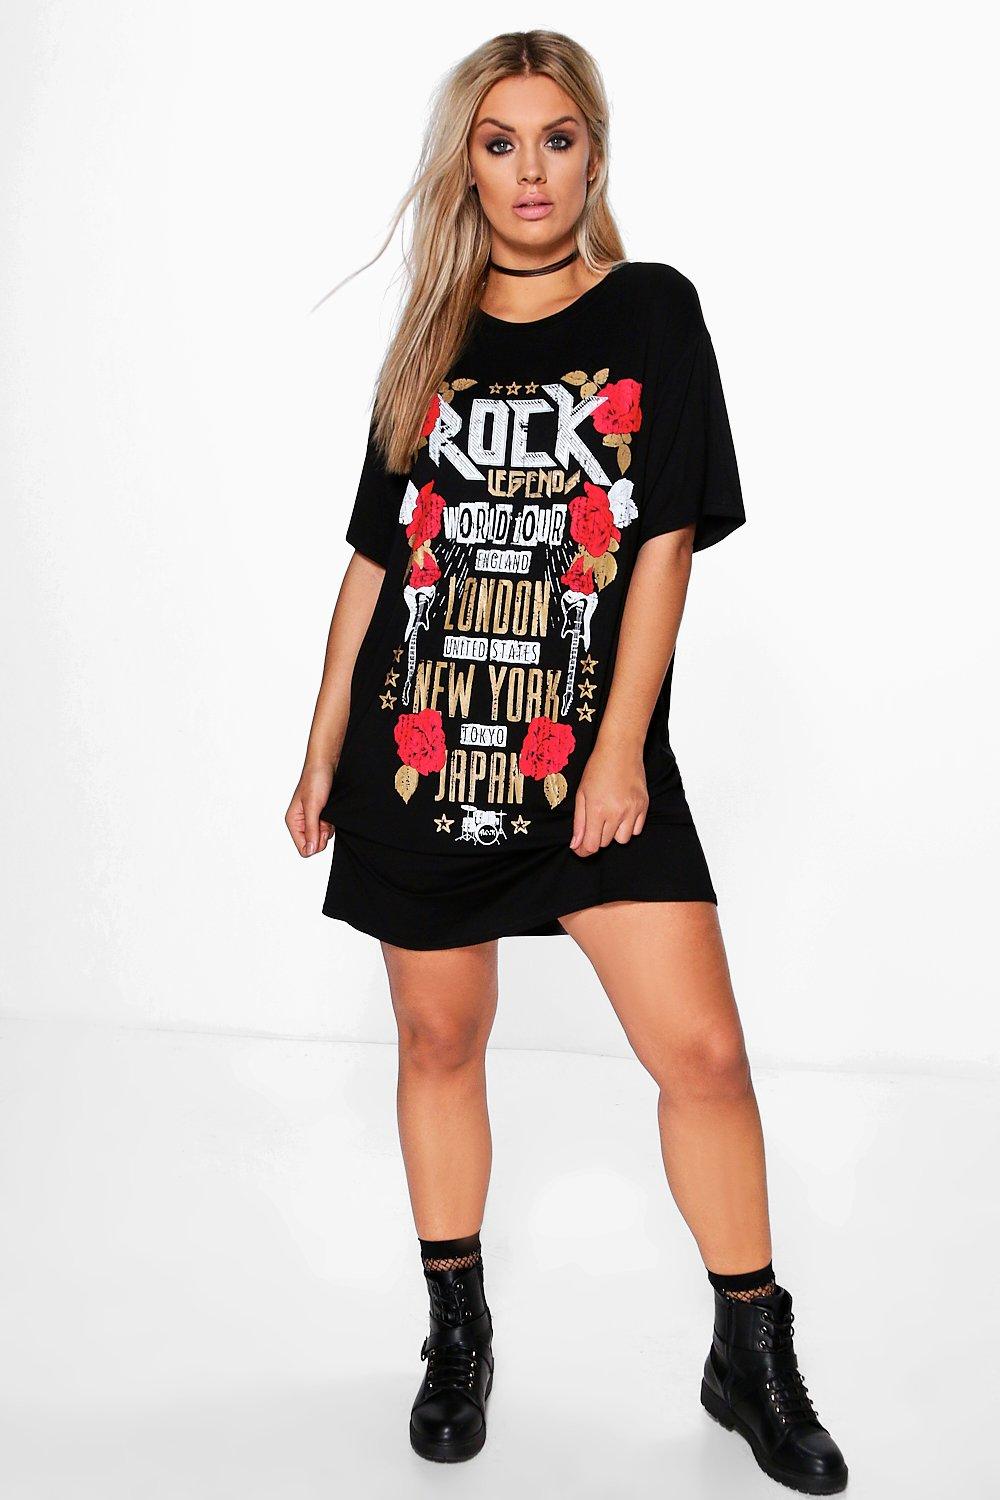 Plus Hollie Rock Slogan Tshirt Dress ...